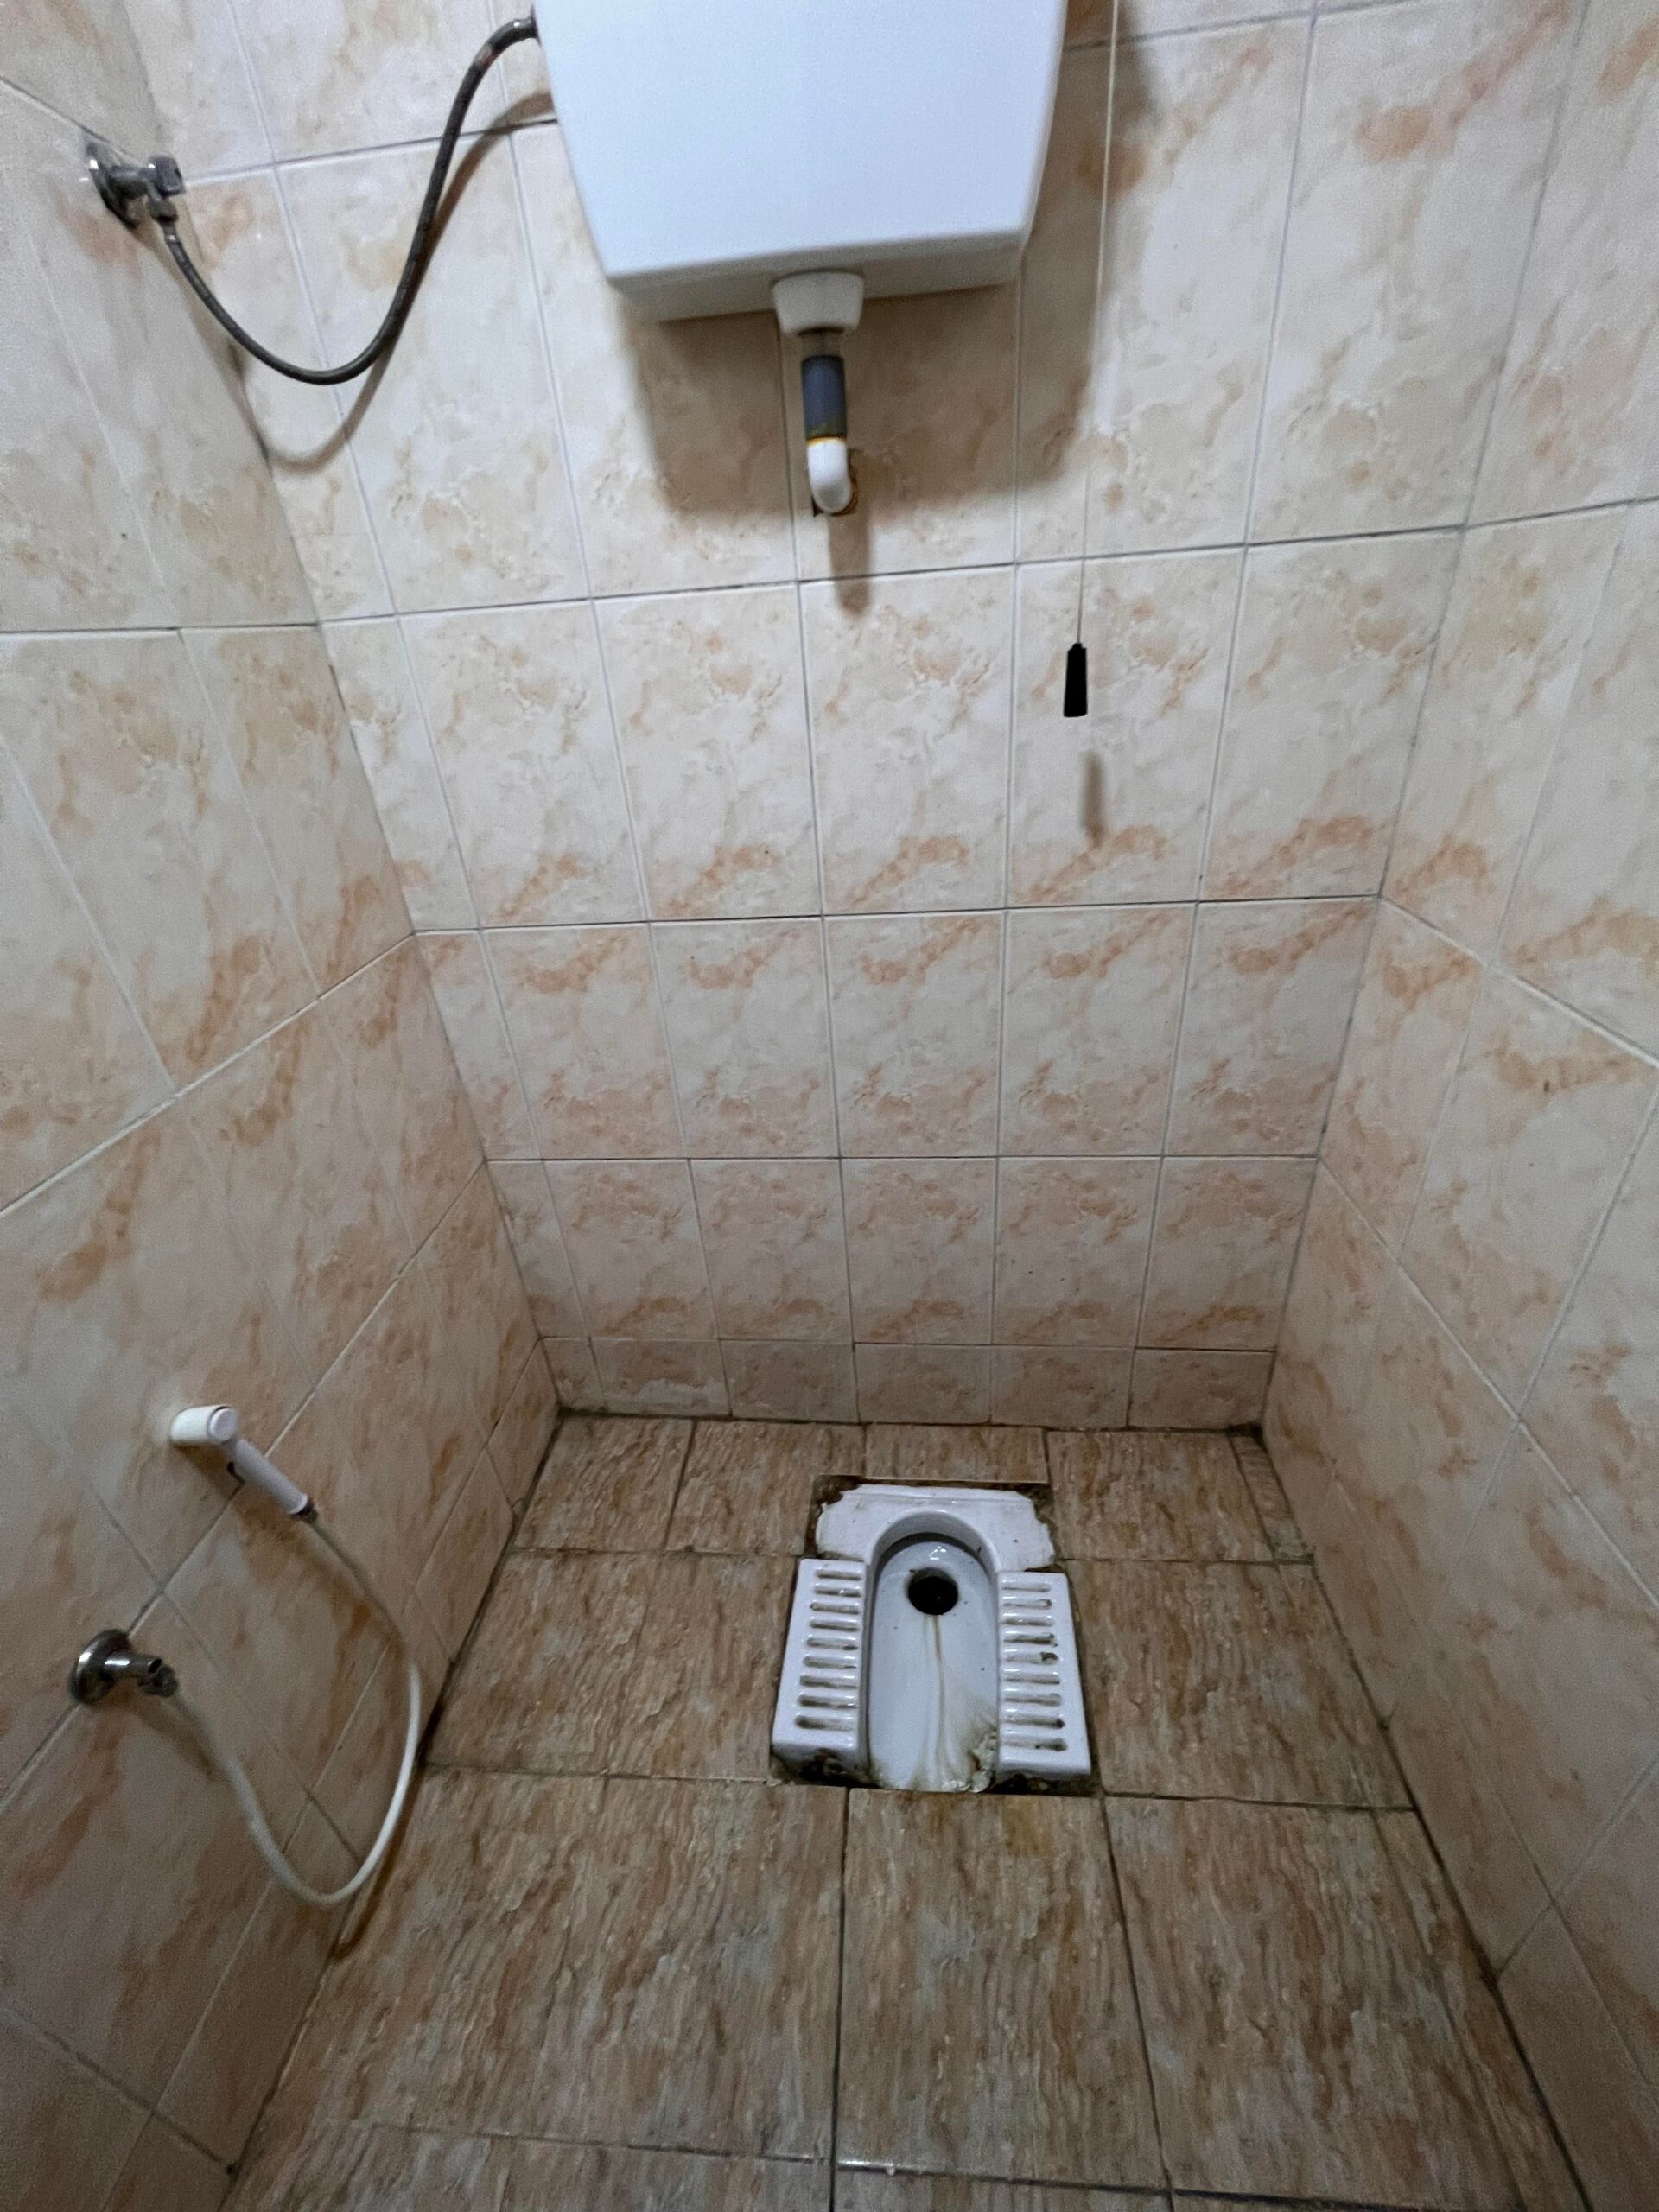 Saudi-Style Public Bathrooms